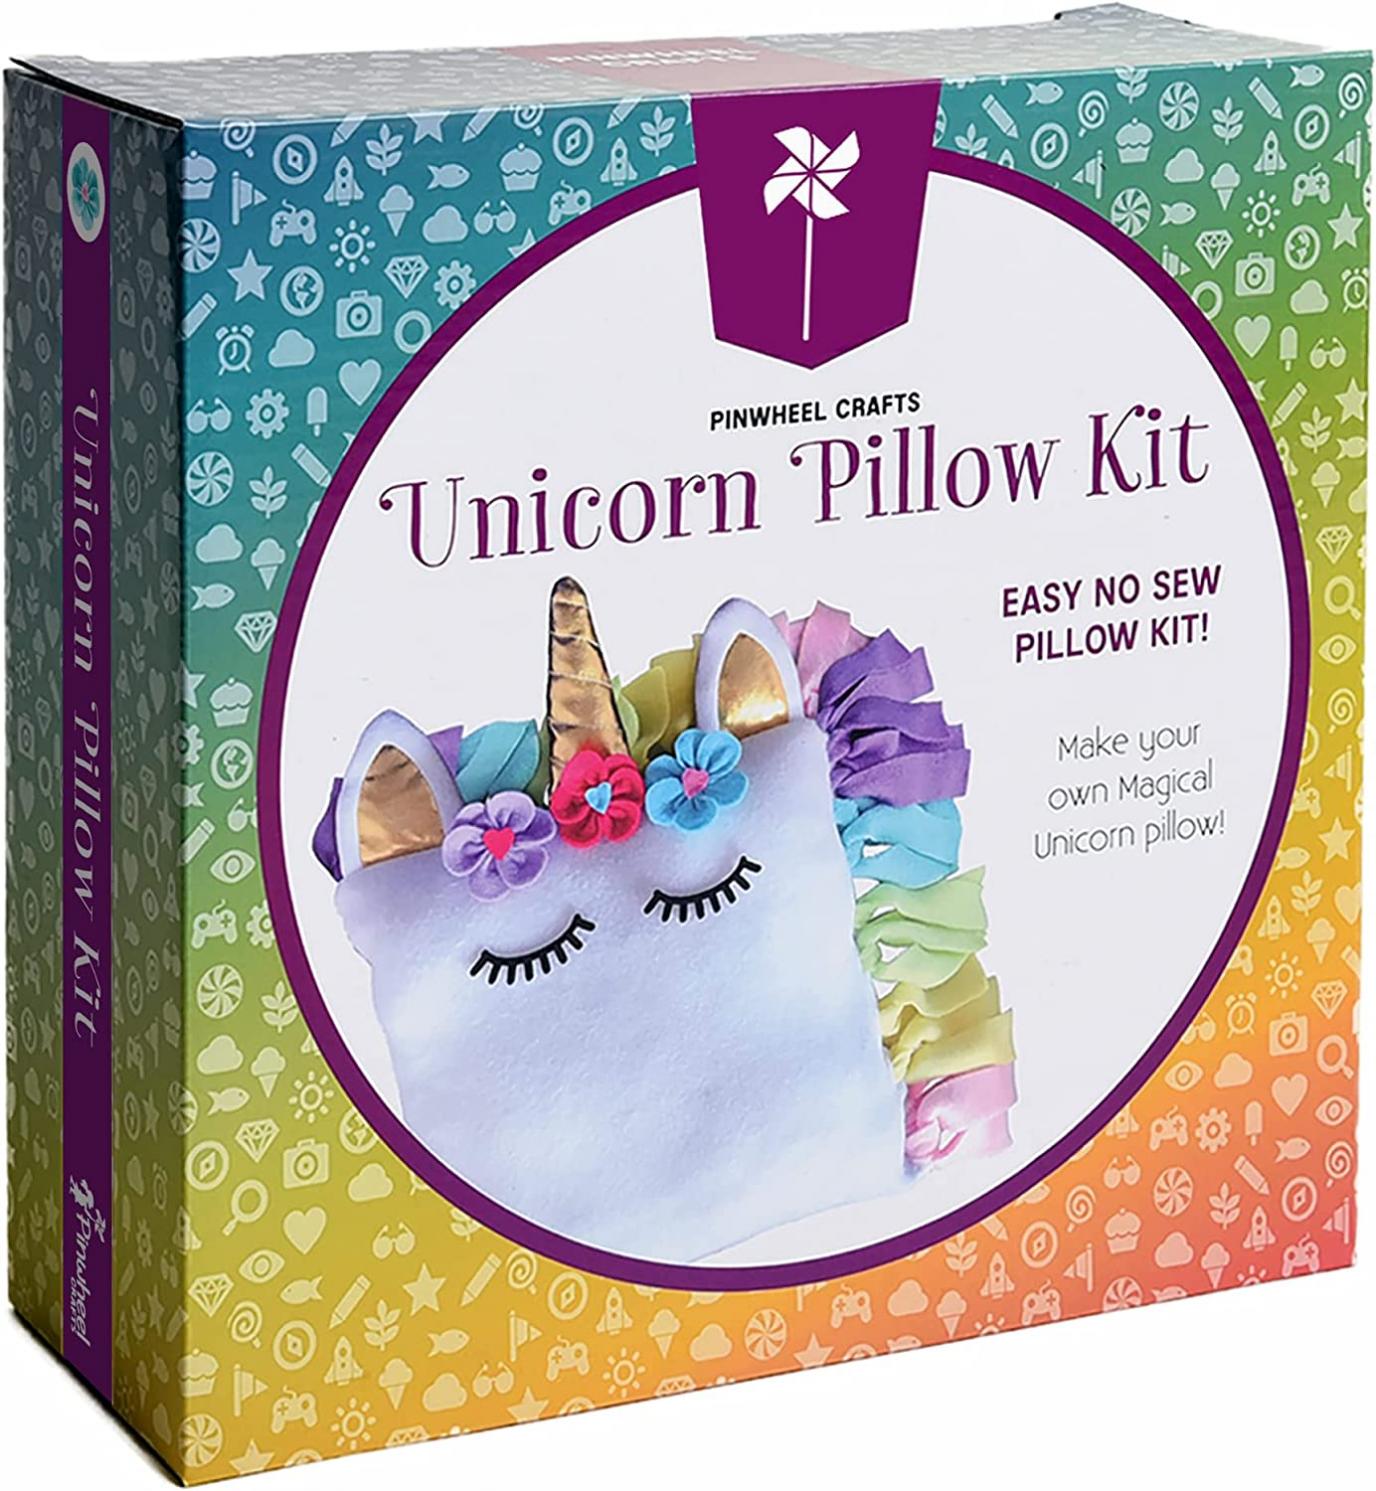 Pinwheel Crafts Unicorn Pillow Kit - No Sew Unicorn Craft Kit - Unicorn Toys, Arts and Crafts for Kids Ages 8-12 - Unicorn Gifts for Girls - Cute Unicorn Bedroom Decor for Girls